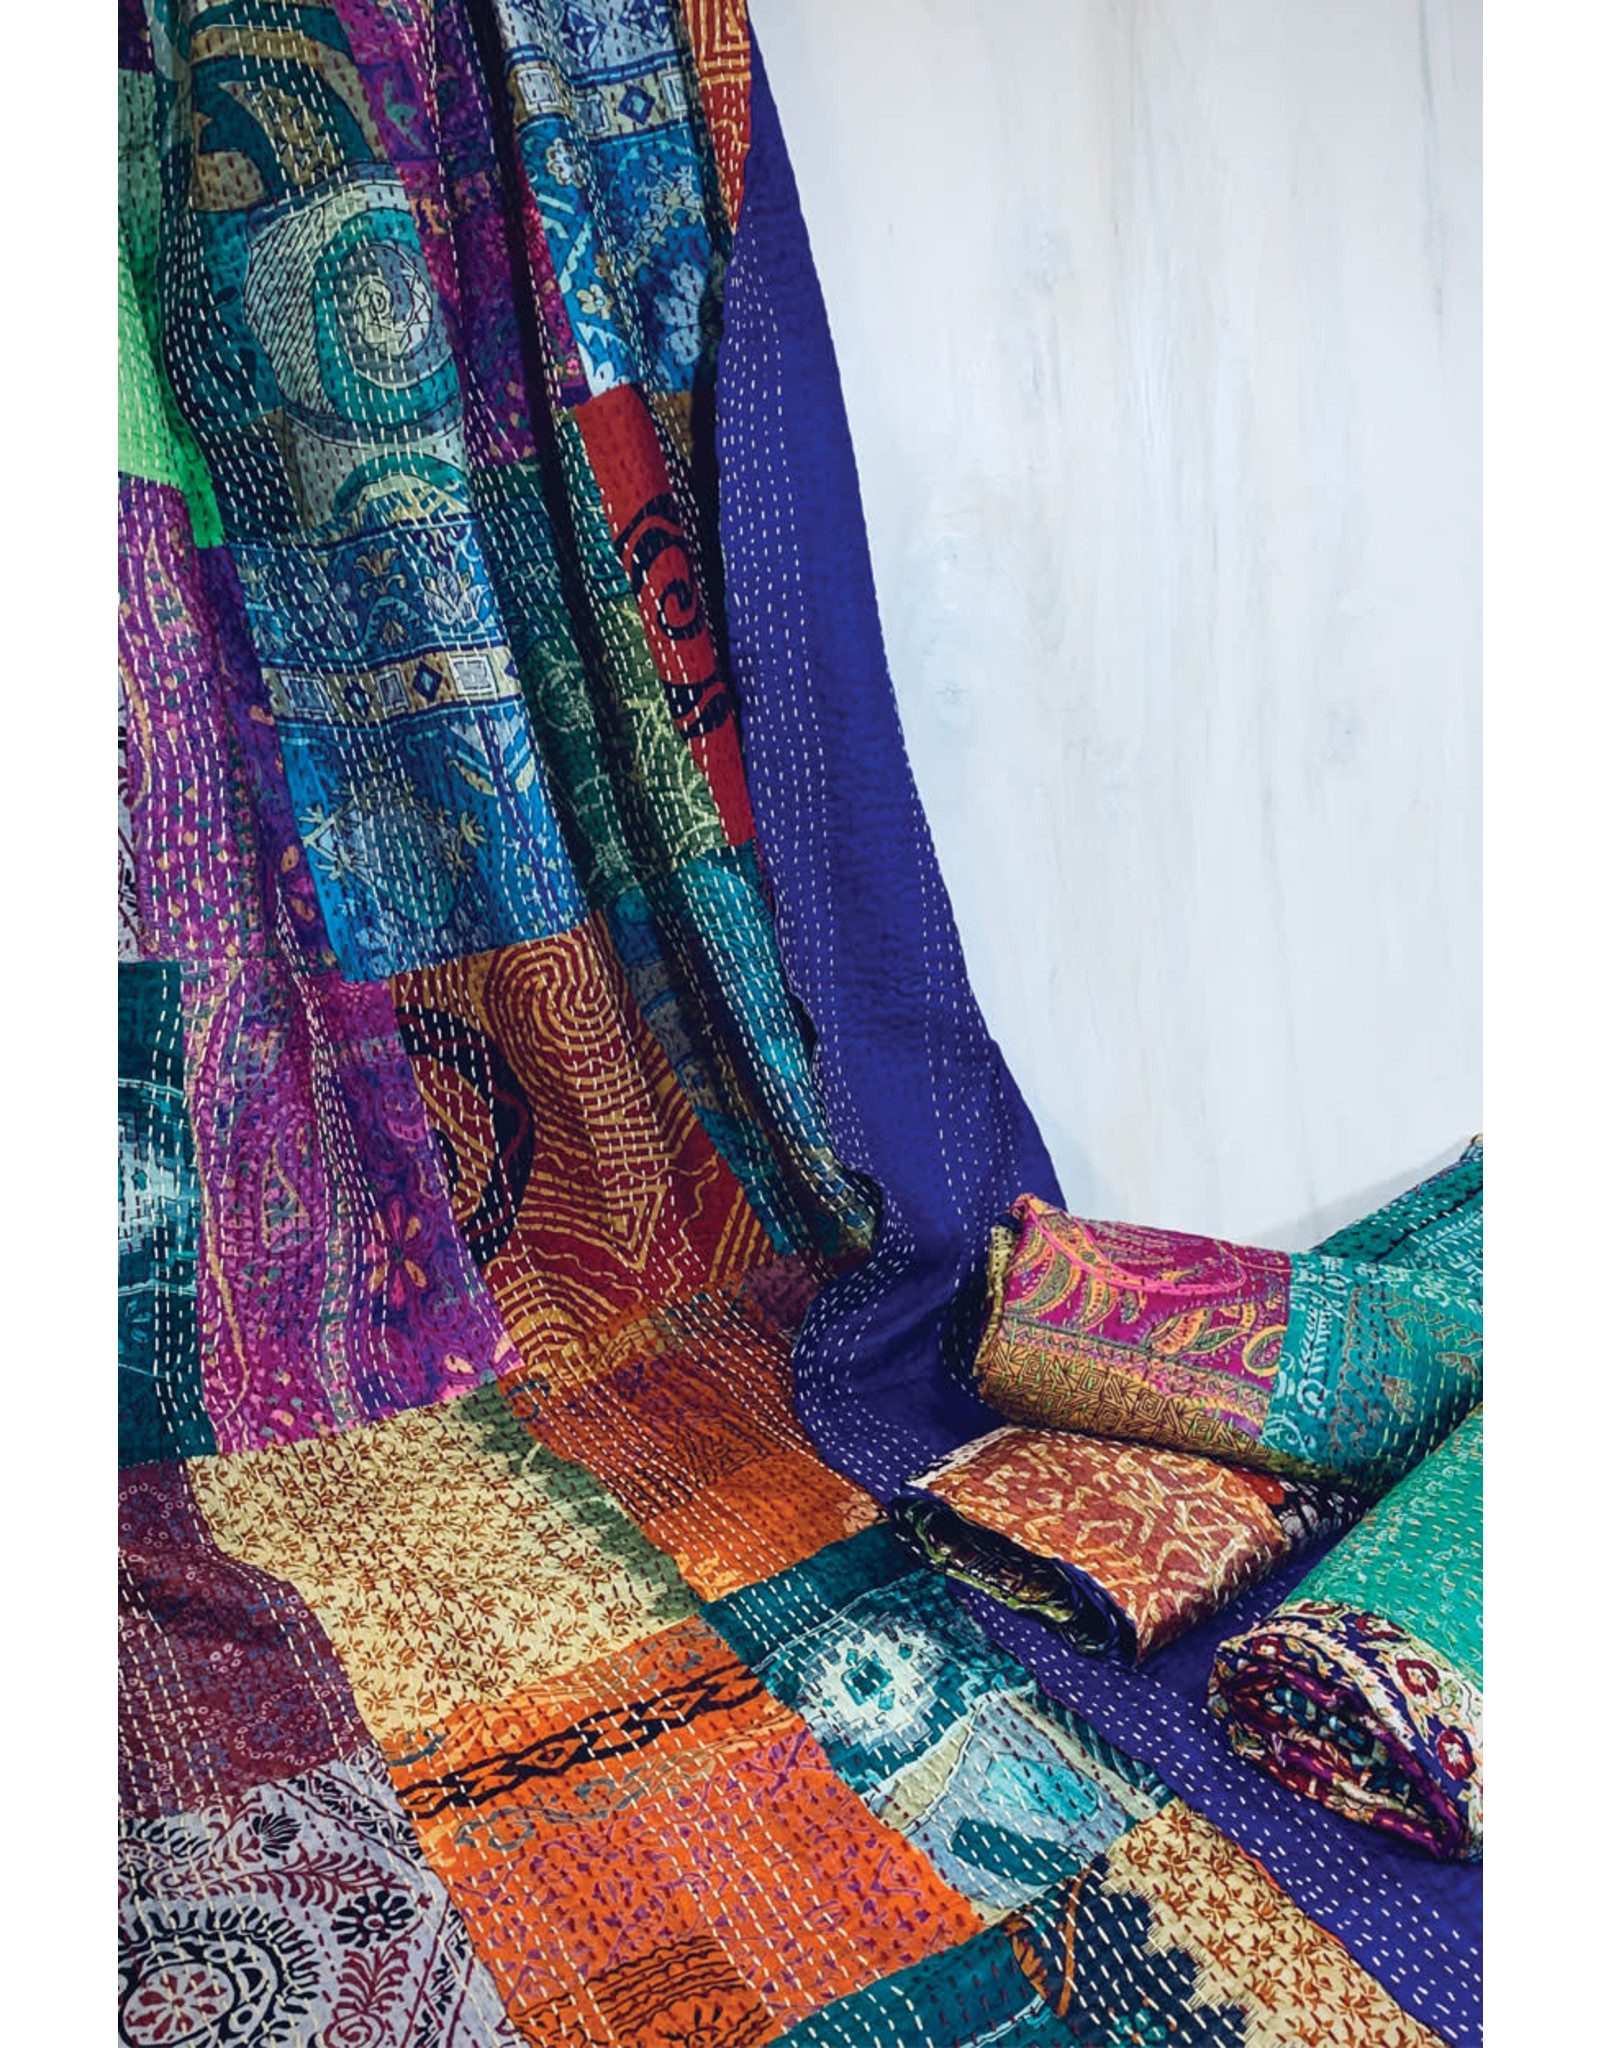 Trade roots Silk Sari Kantha Throw, India